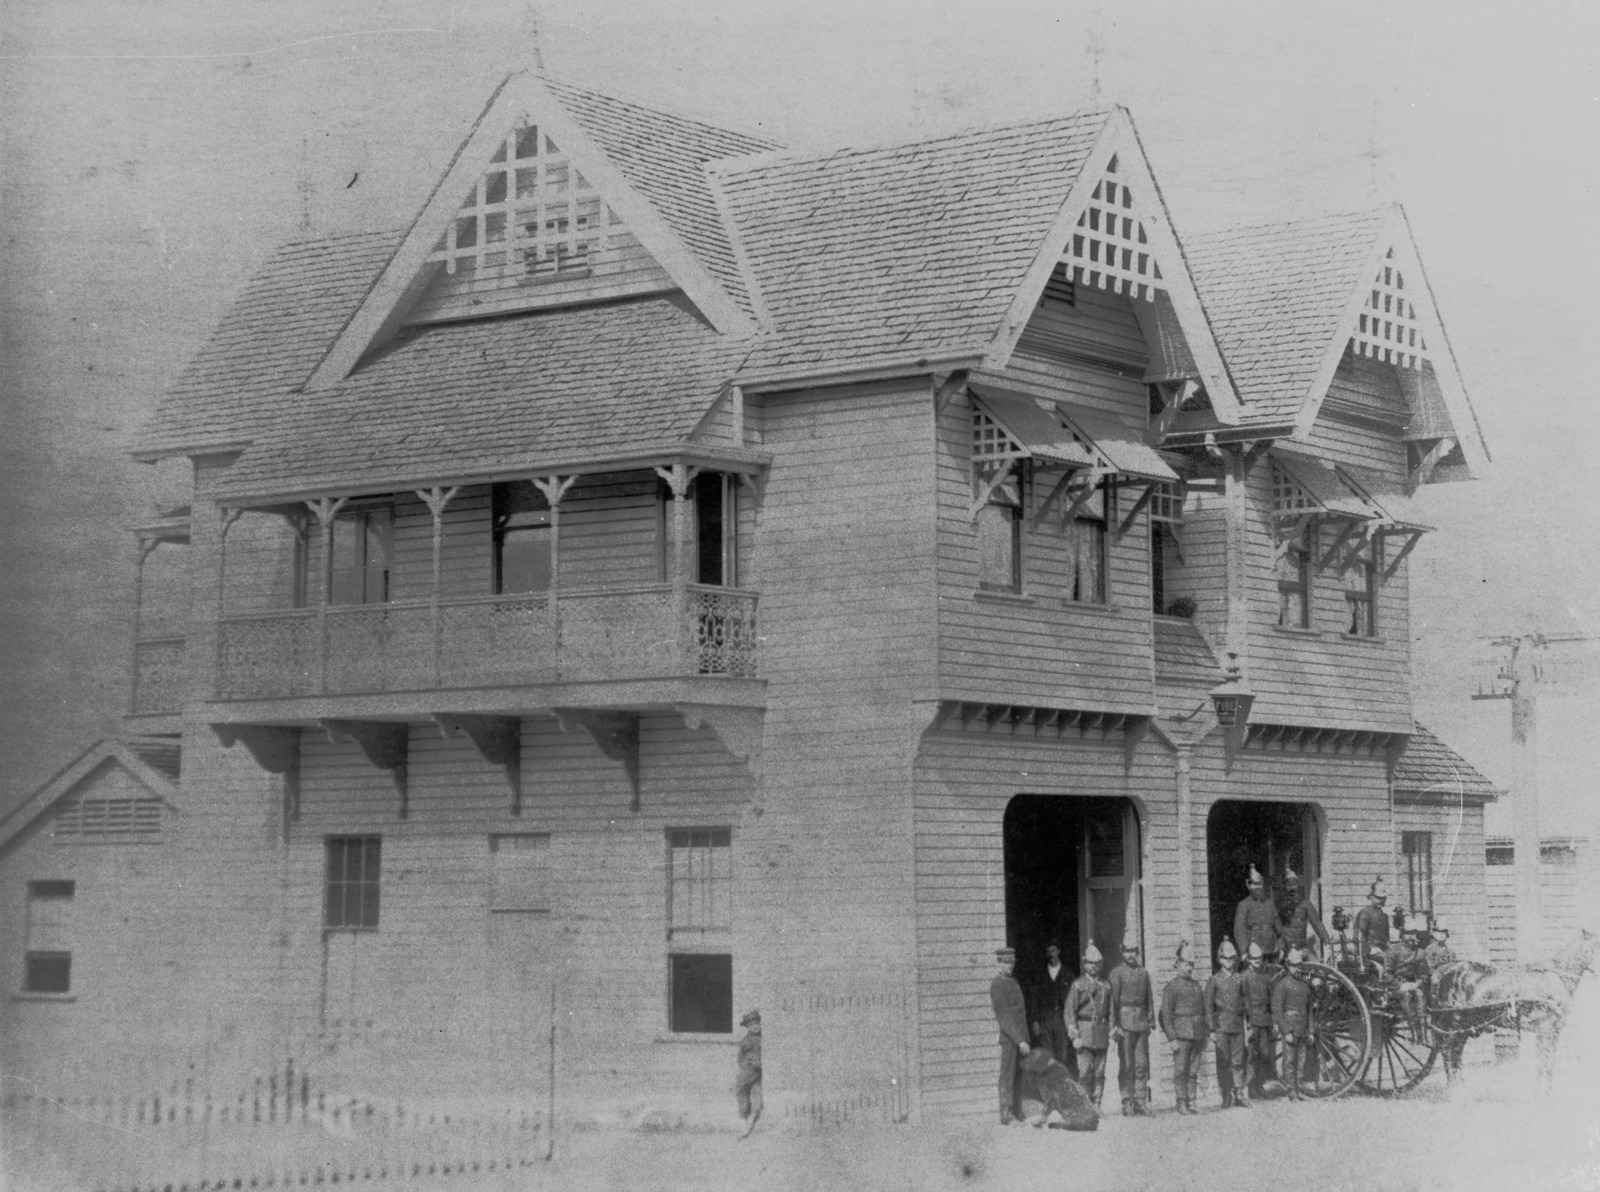 South Brisbane Fire Station, ca. 1900